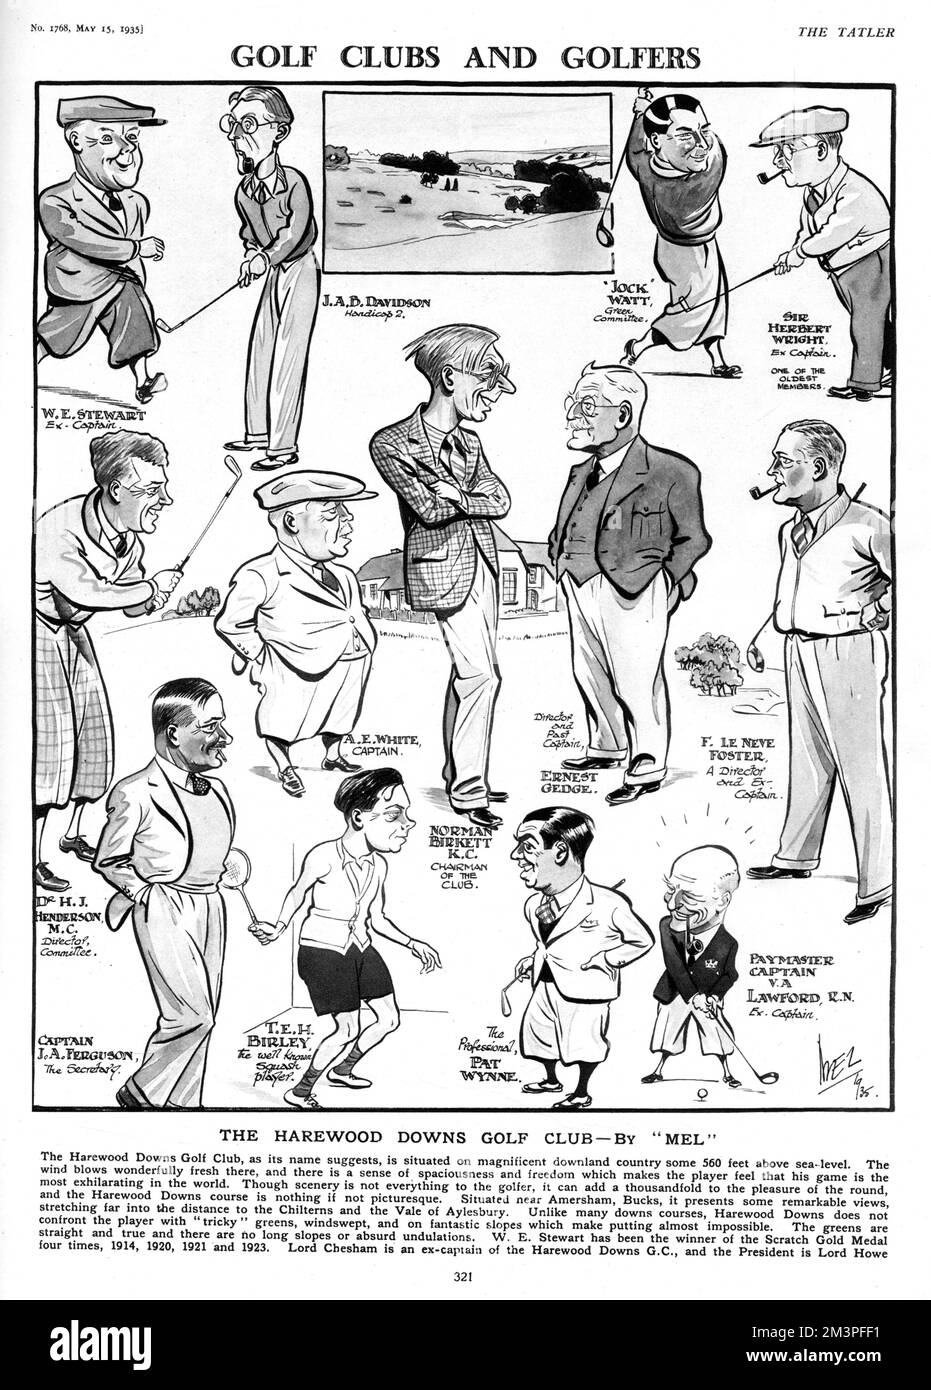 Il Harewood Downs Golf Club, raffigurato dal caricaturista Mel, con W. E. Stewart, J. A. B. Davidson, Jock Watt, Sir Herbert Wright, Dr. H. J. Henderson, M.C., A. E. White, Norman Birkett, Ernest Gedge, F. le neve Foster, Capitano J. A. Ferguson, T.E.H. Birley, Pat Wynne e Paymaster Captain V. A. Lawford, R.N. Data: 1935 Foto Stock